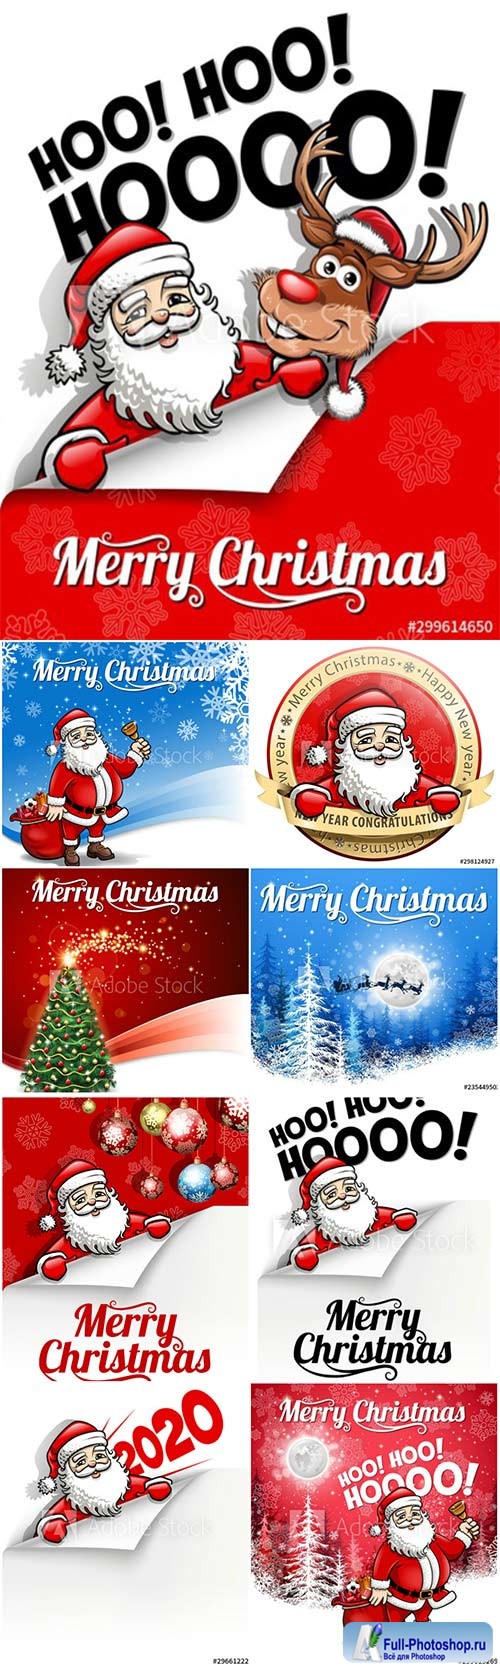 Santa's Christmas snowy greeting, Merry Christmas card